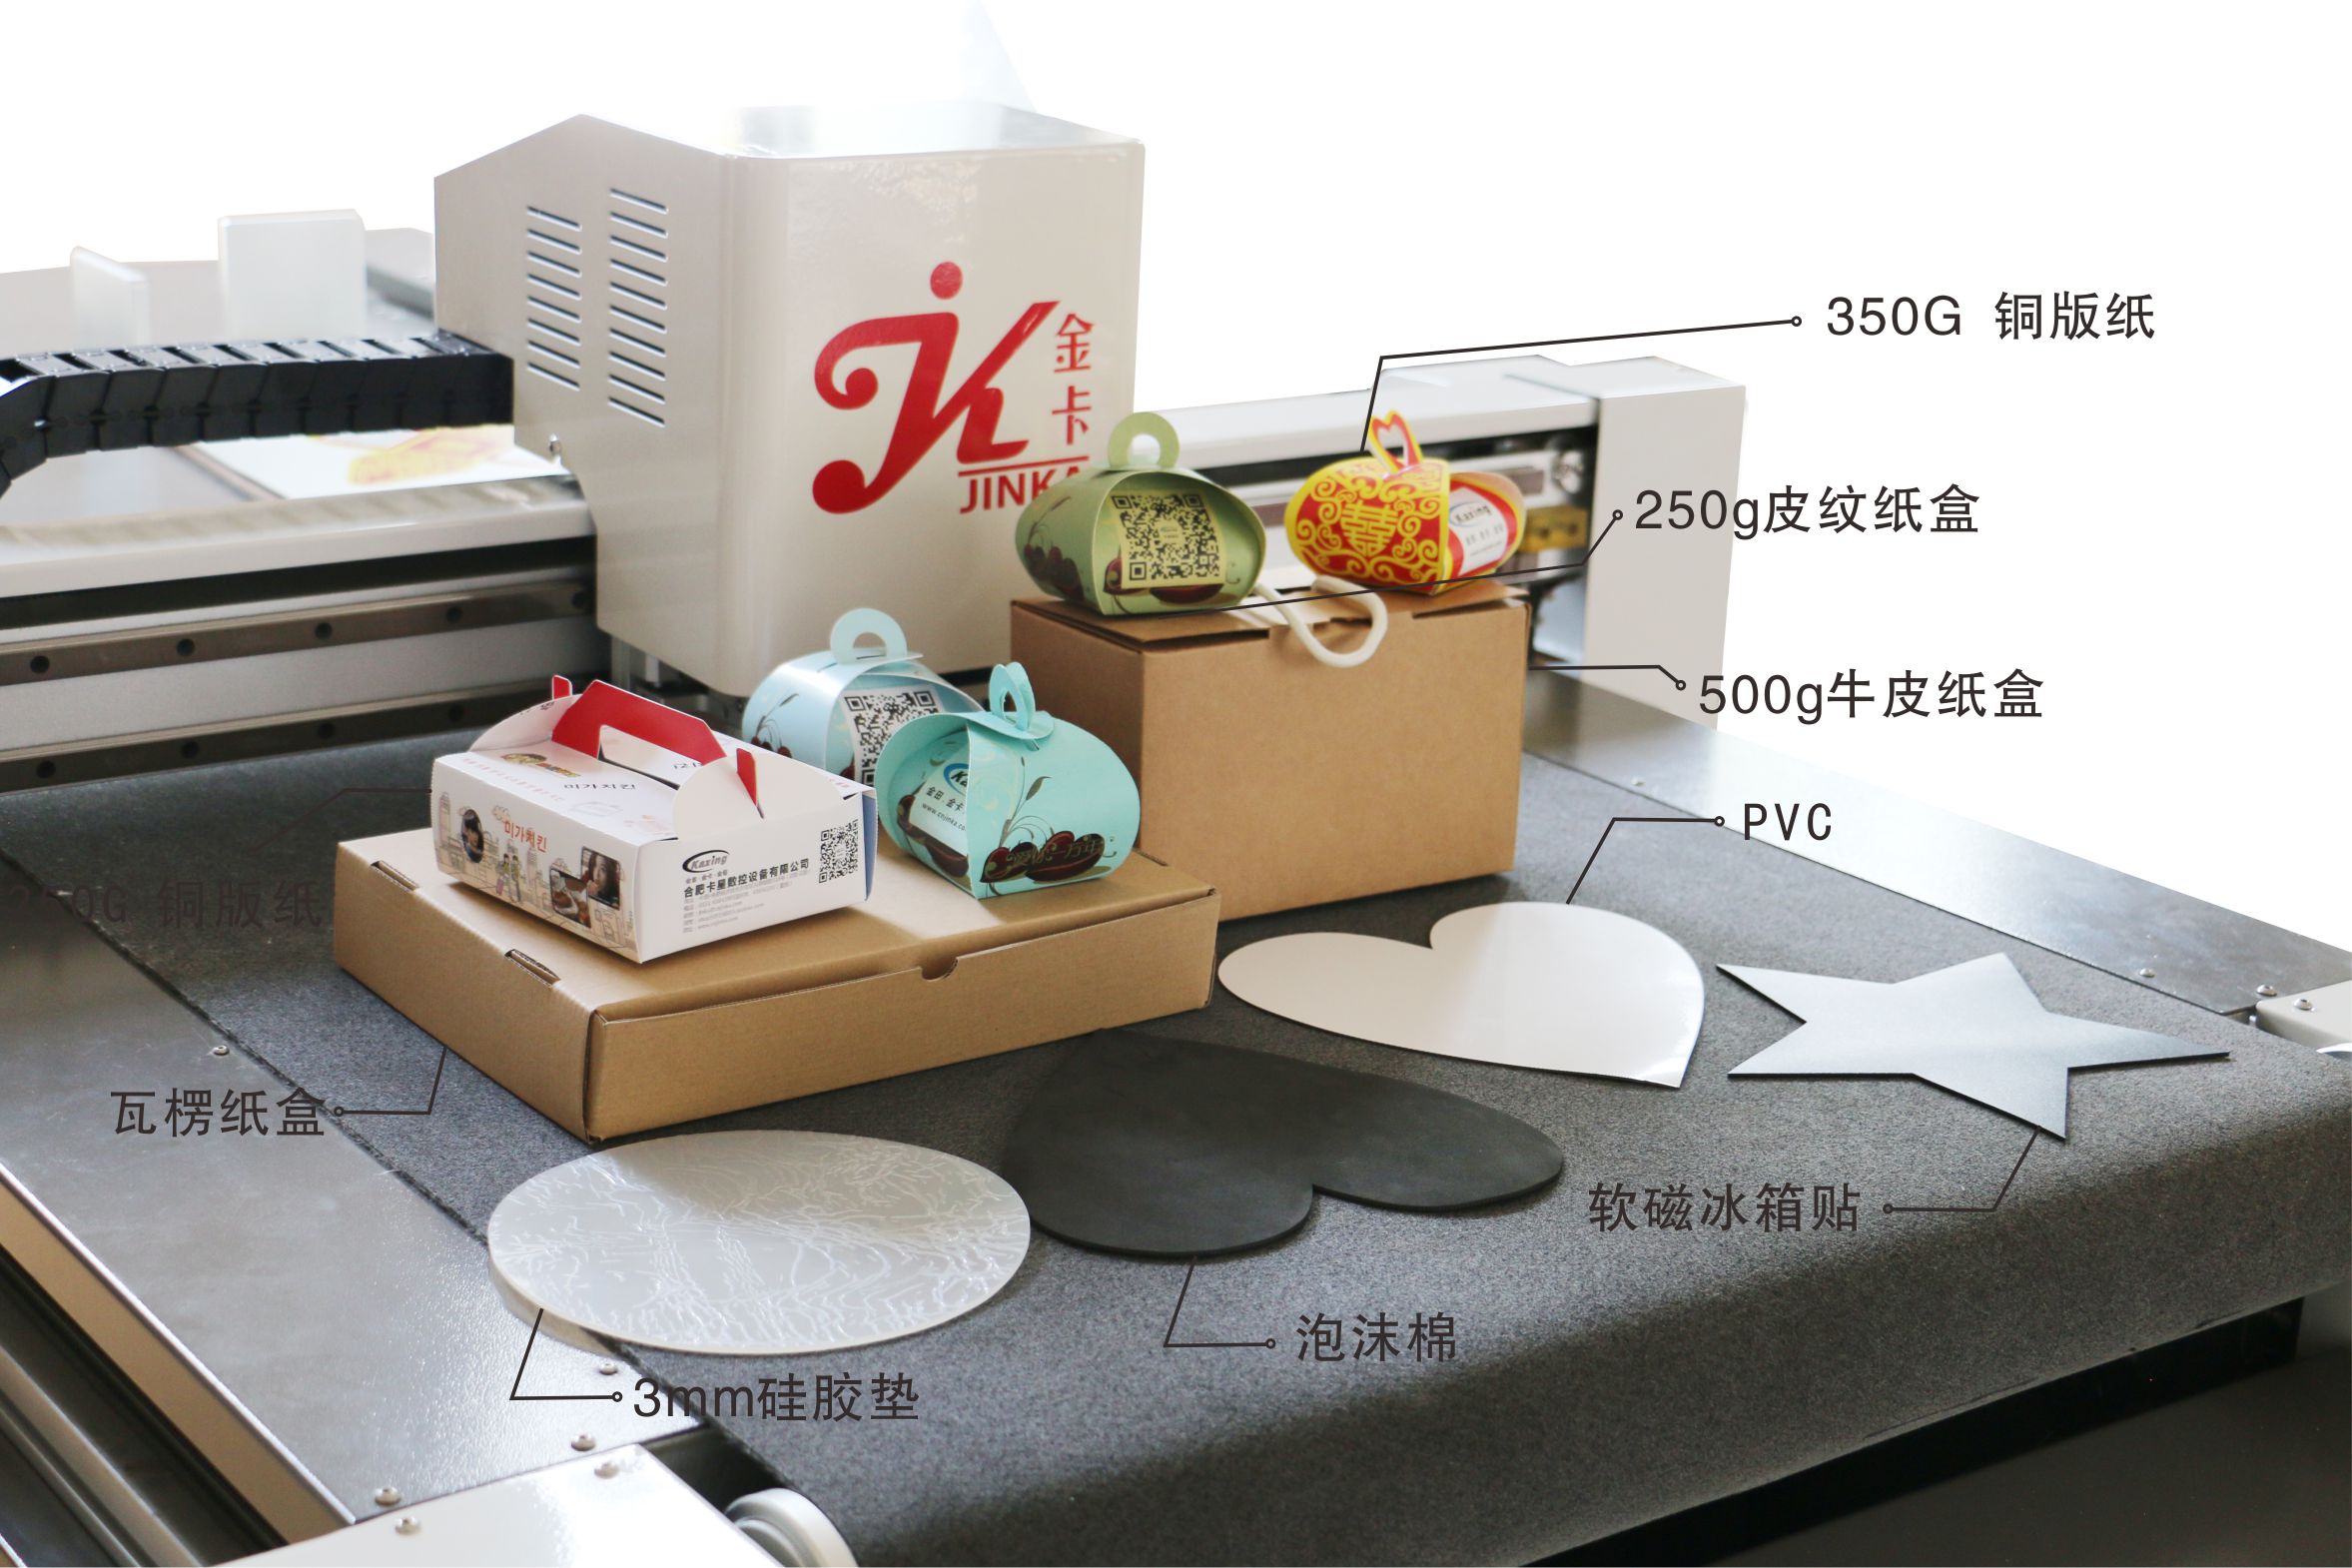 JINKA New Design Manufacturer JKA6090 Automatic Loading And Unloading Flatbed Cutter